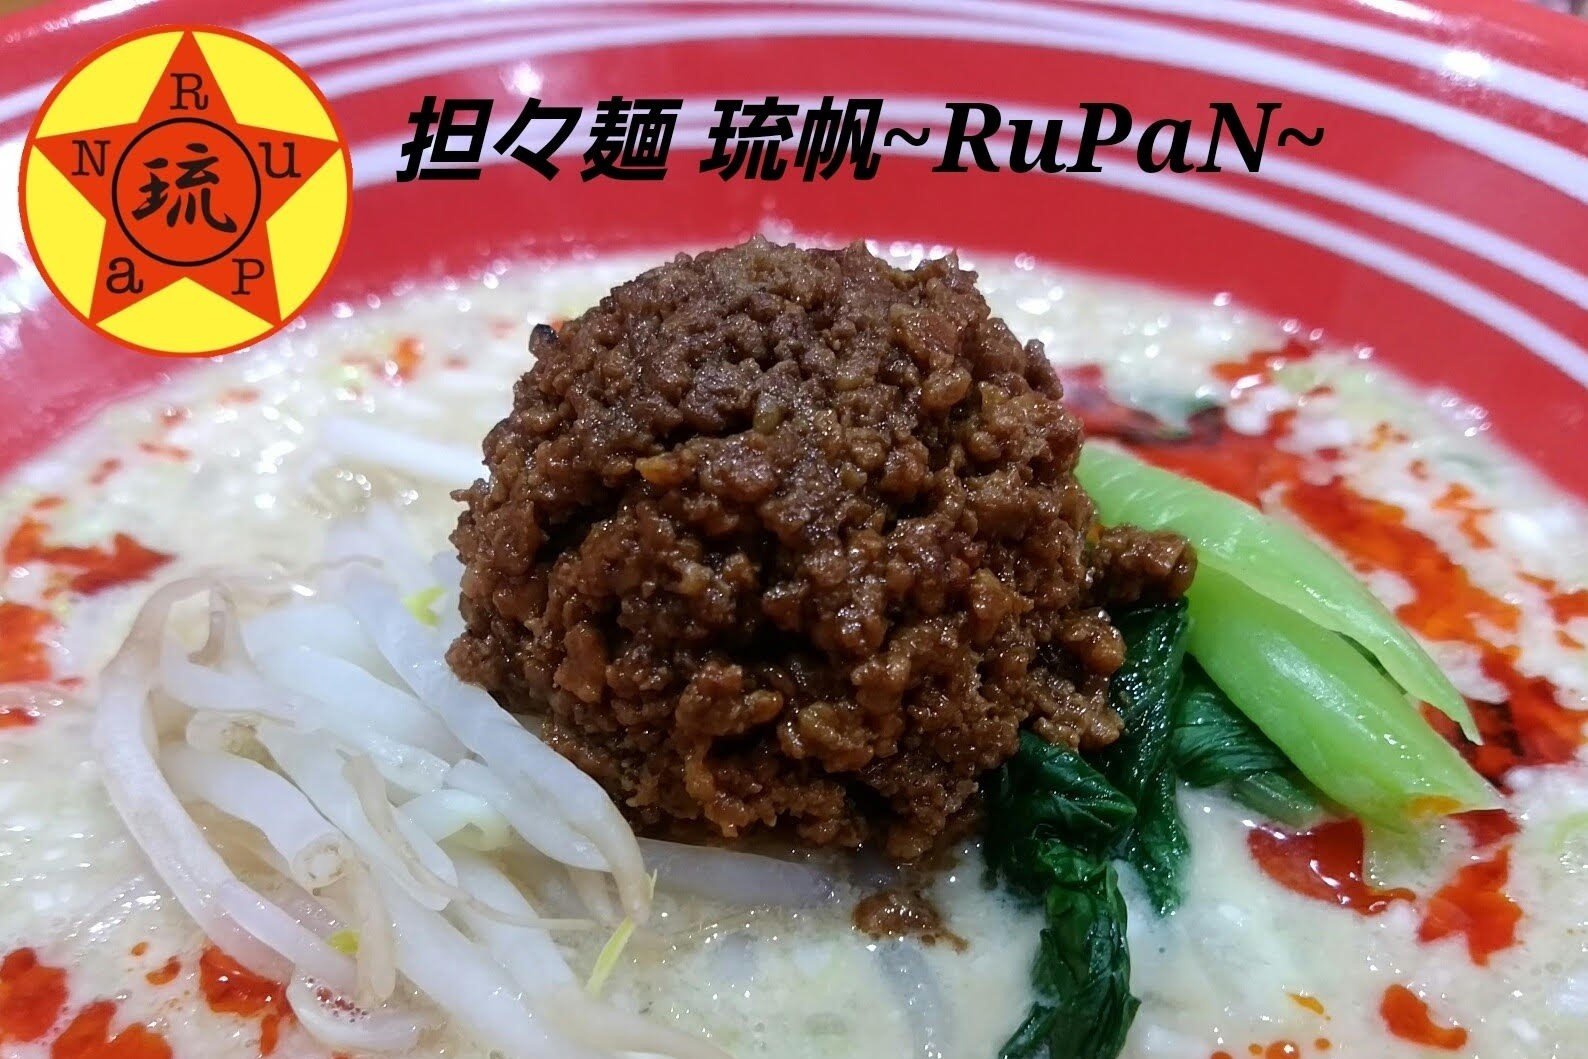 担々麺 琉帆 -RuPaN-